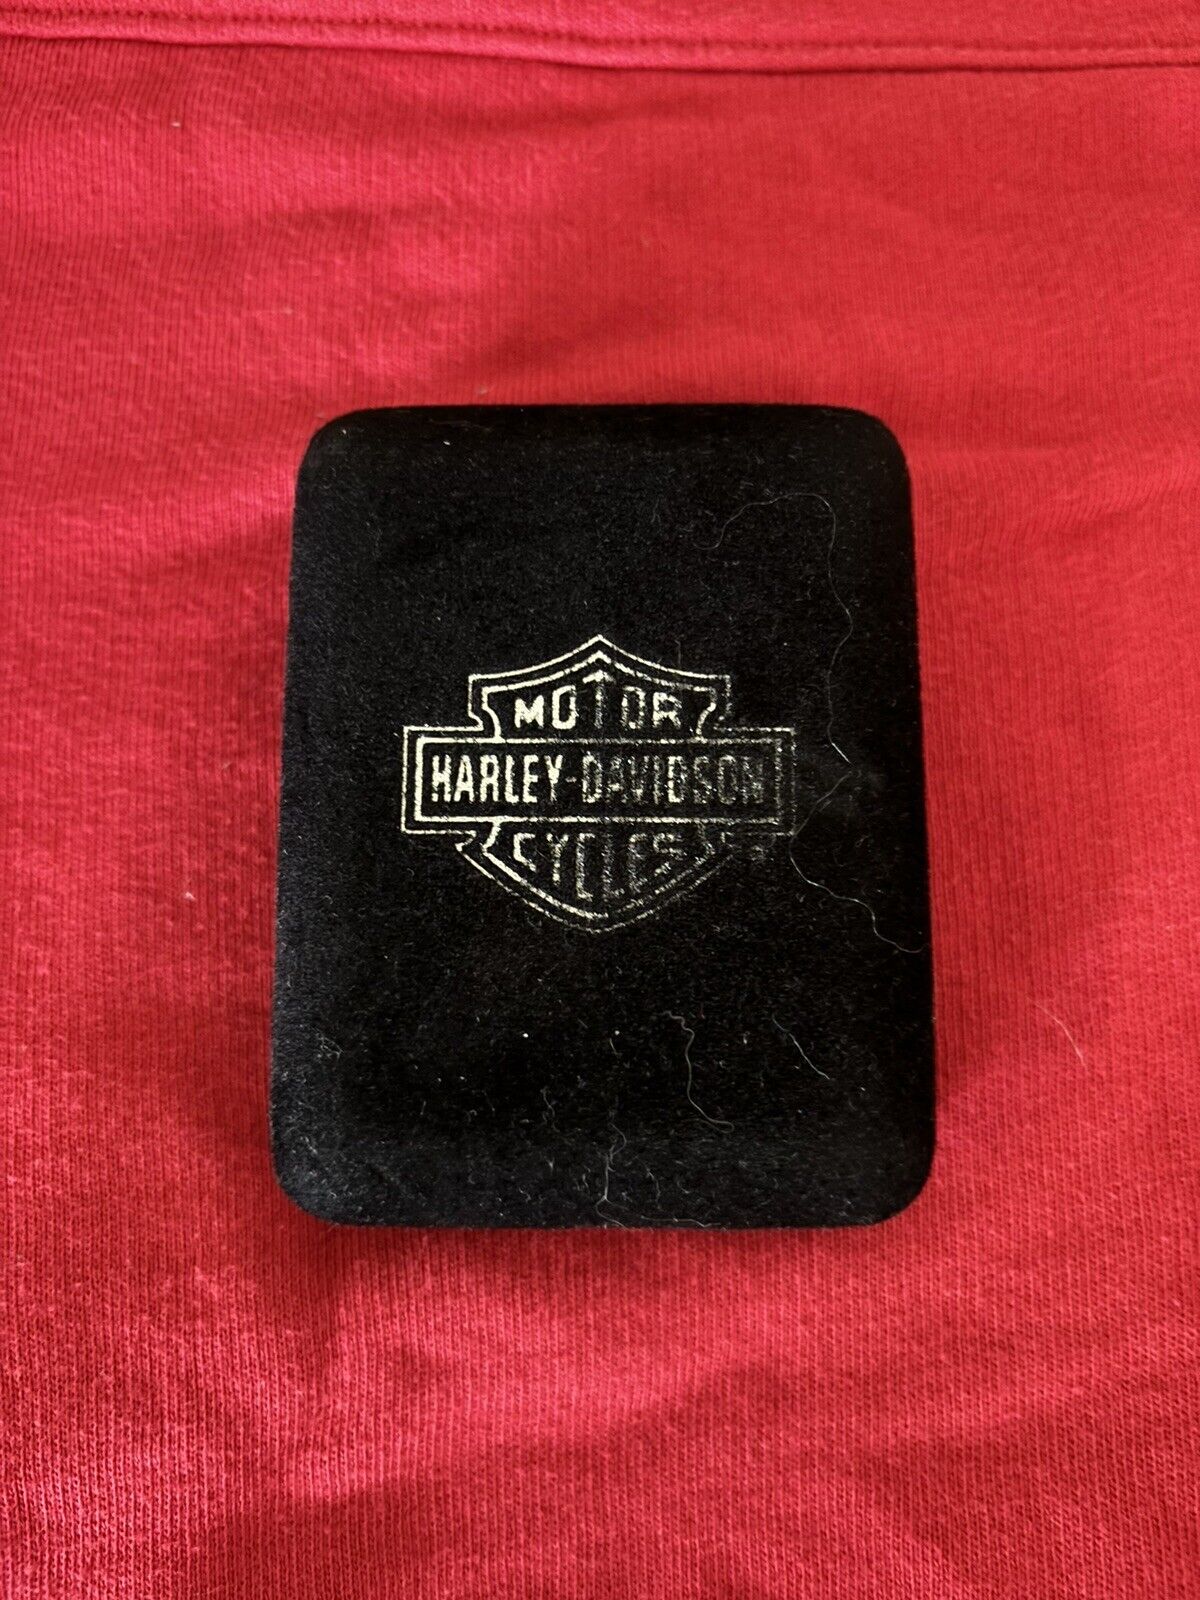 Zippo gold plated etched Harley Davison zippo lighter